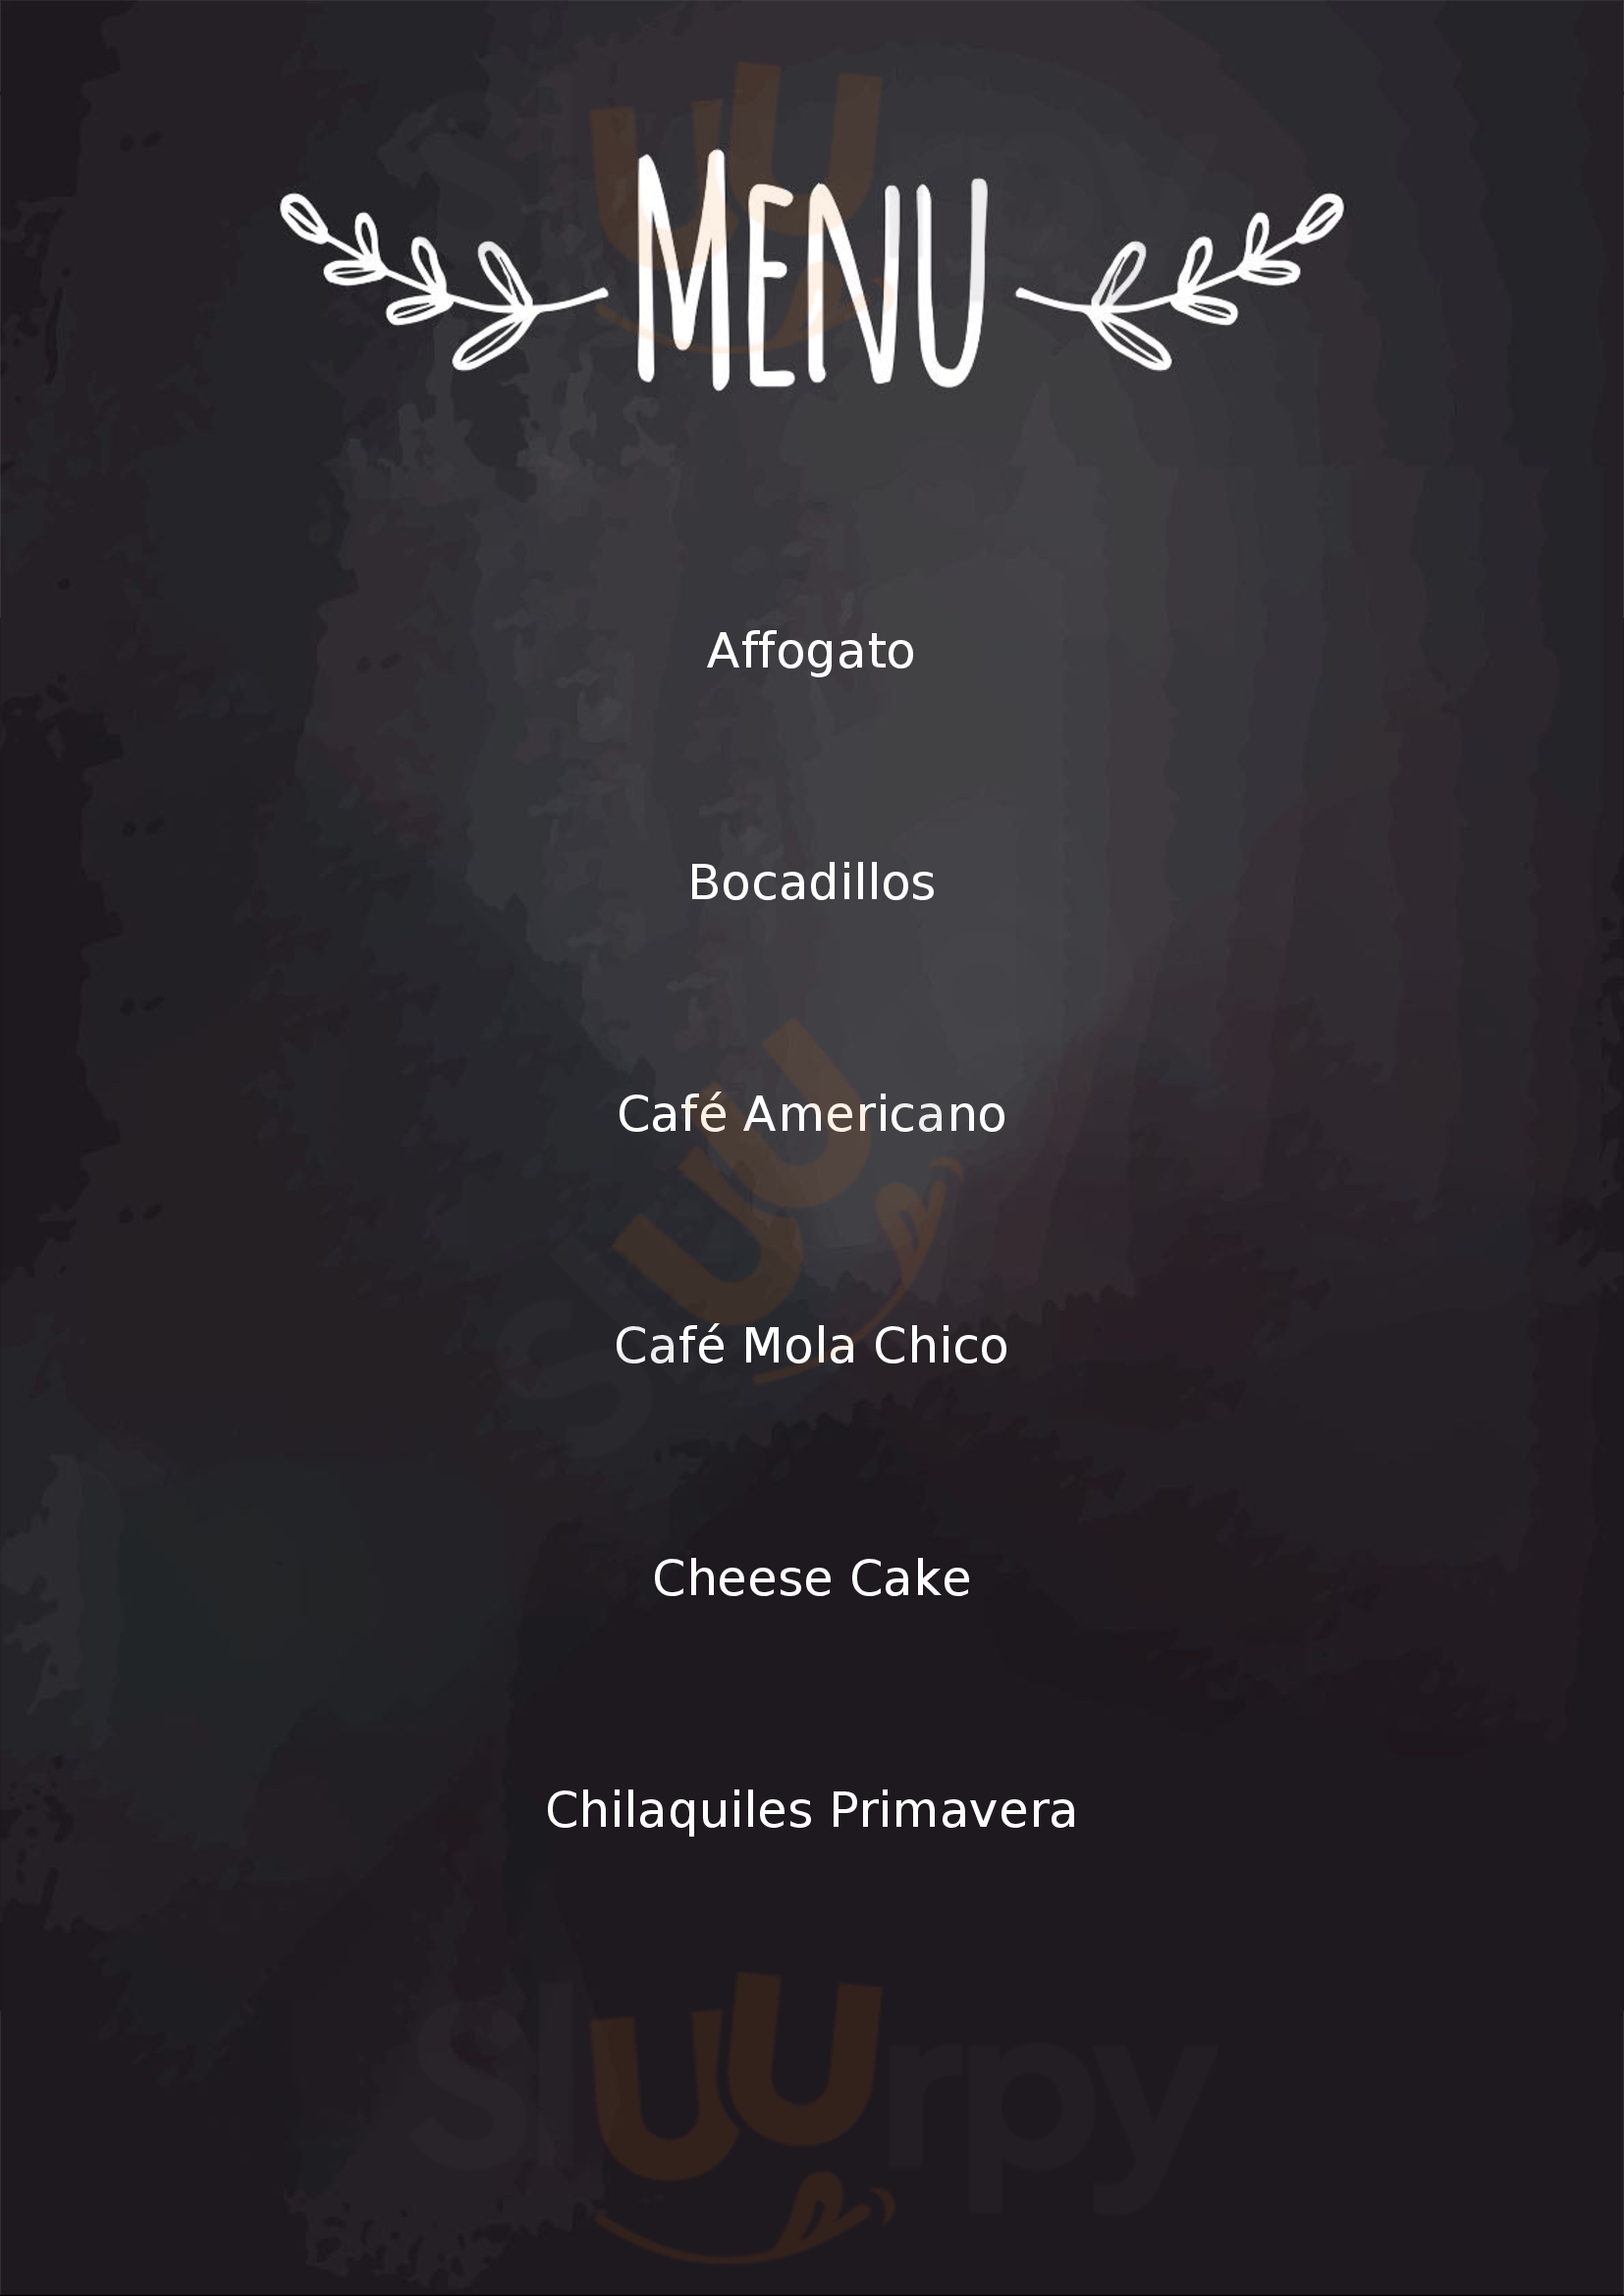 Luziernaga Café Del Bosque Guadalajara Menu - 1